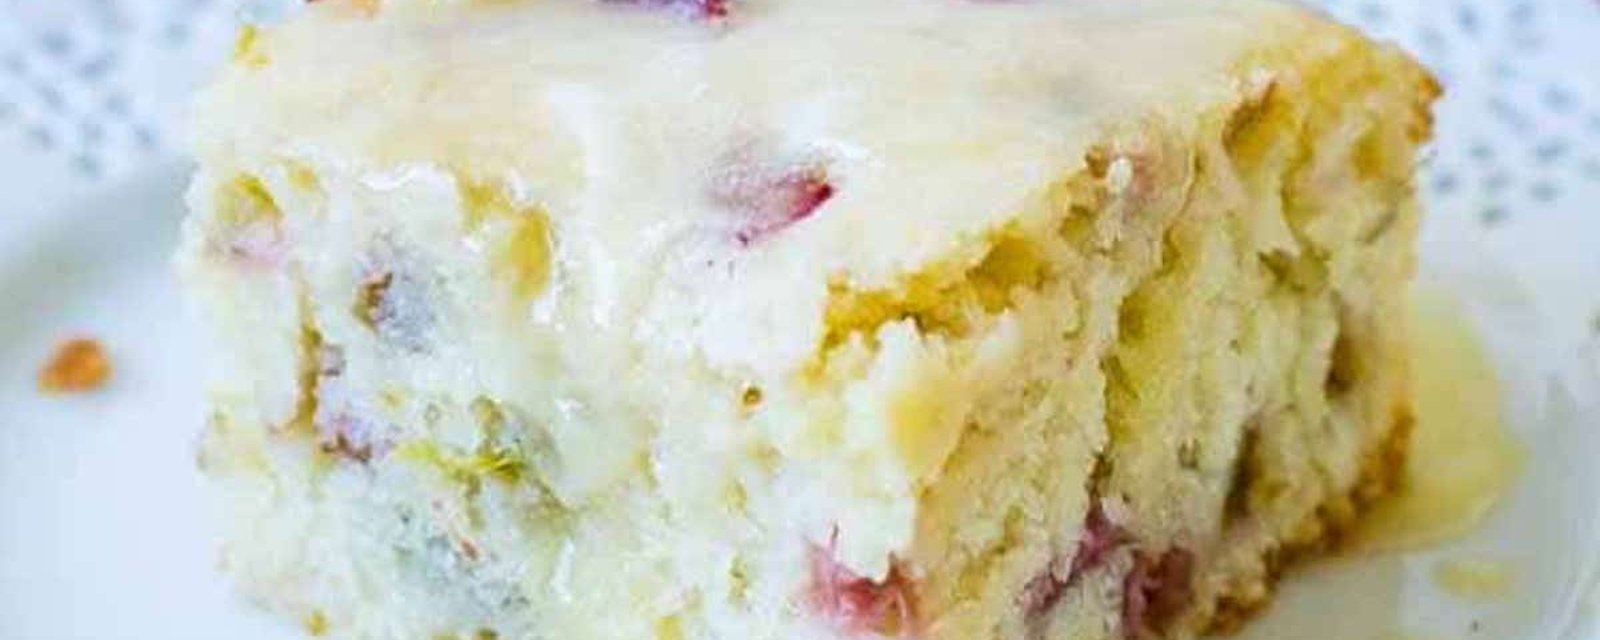 Gâteau moelleux rhubarbe avec sa sauce au beurre